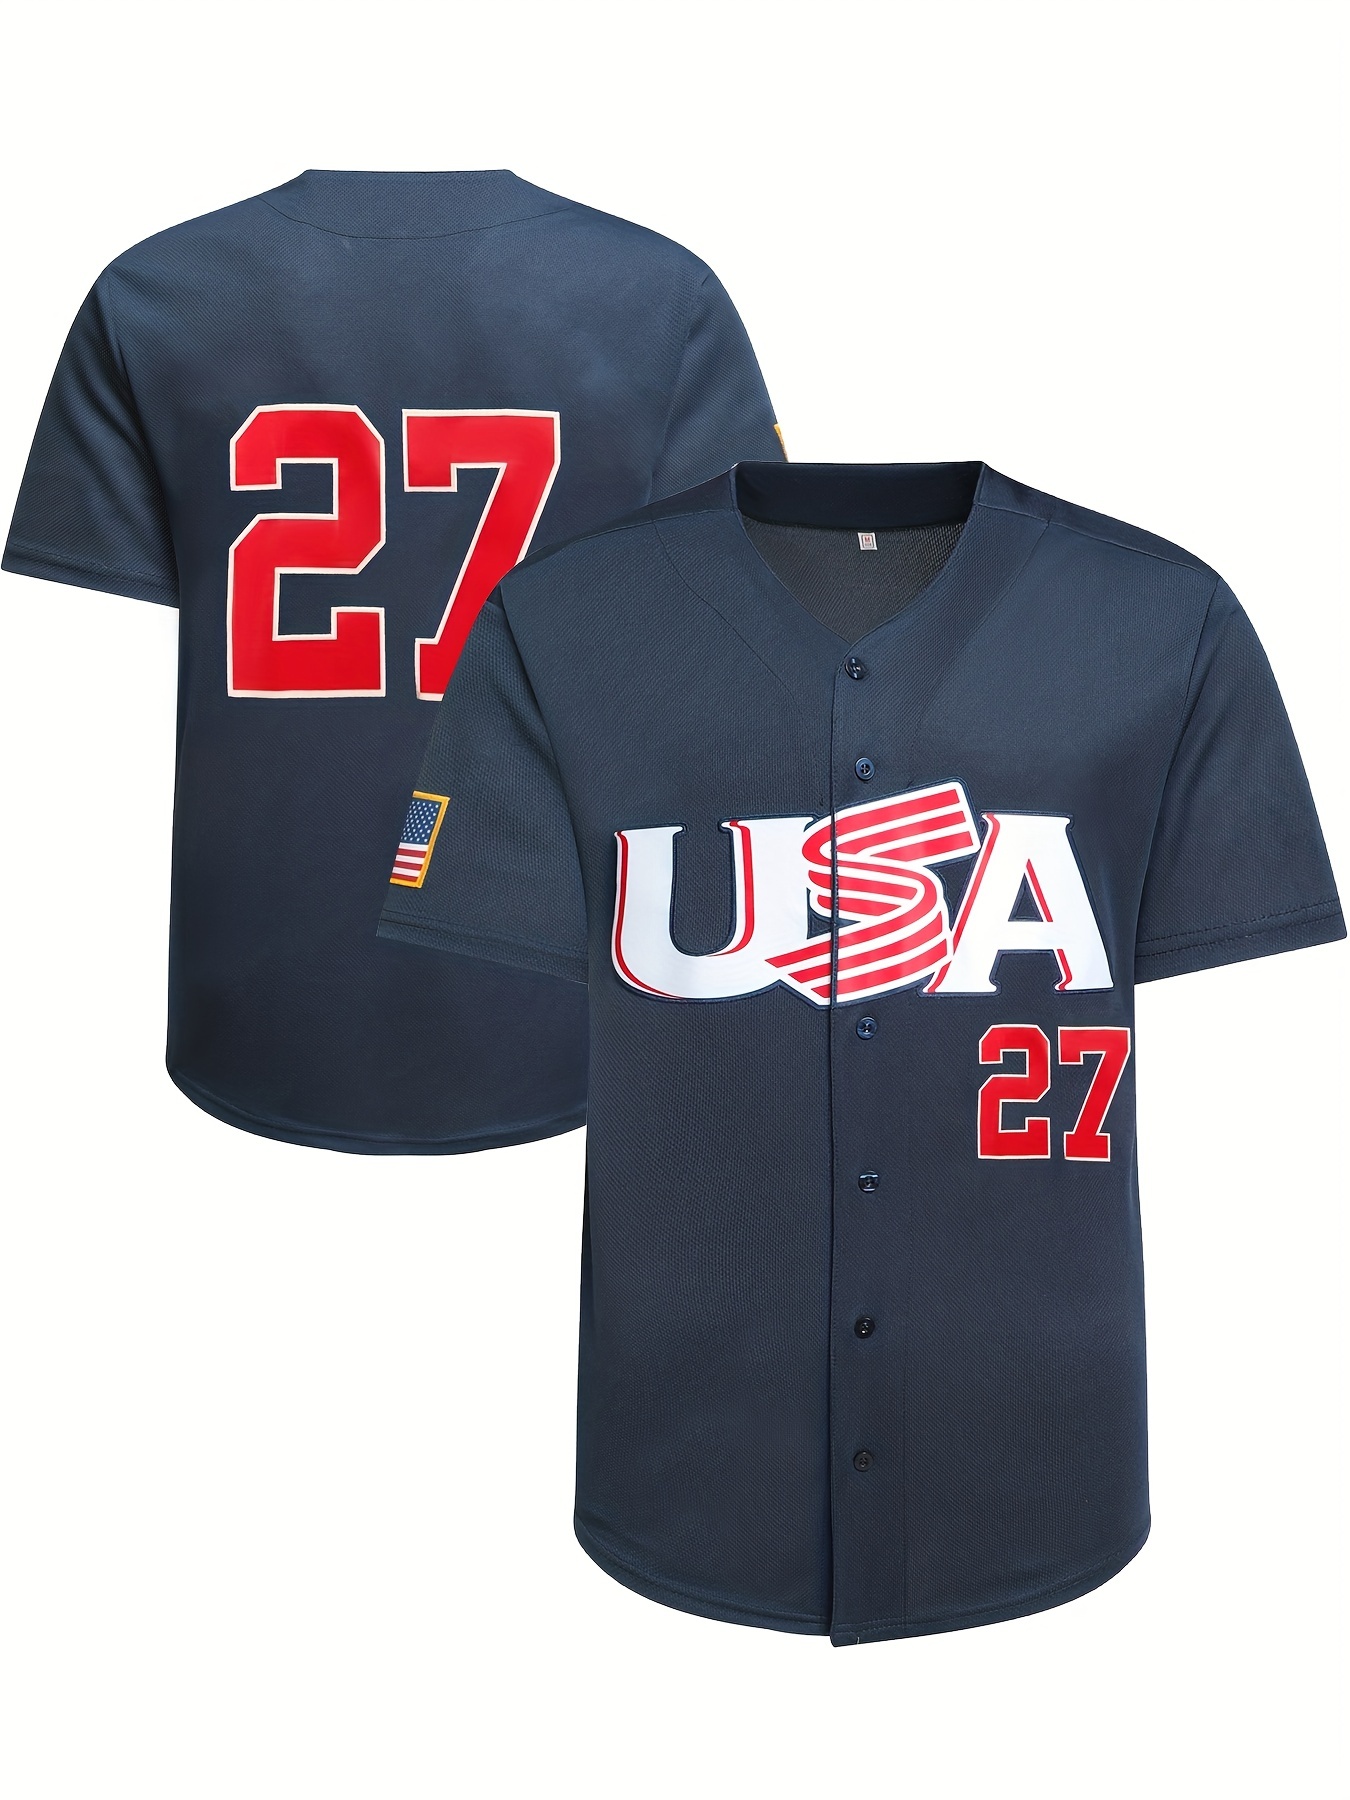 Men's Solid Color Classic Design Baseball Jersey, The Sandlot Print Retro Baseball Shirt, Slightly Stretch Breathable Sports Uniform for Training